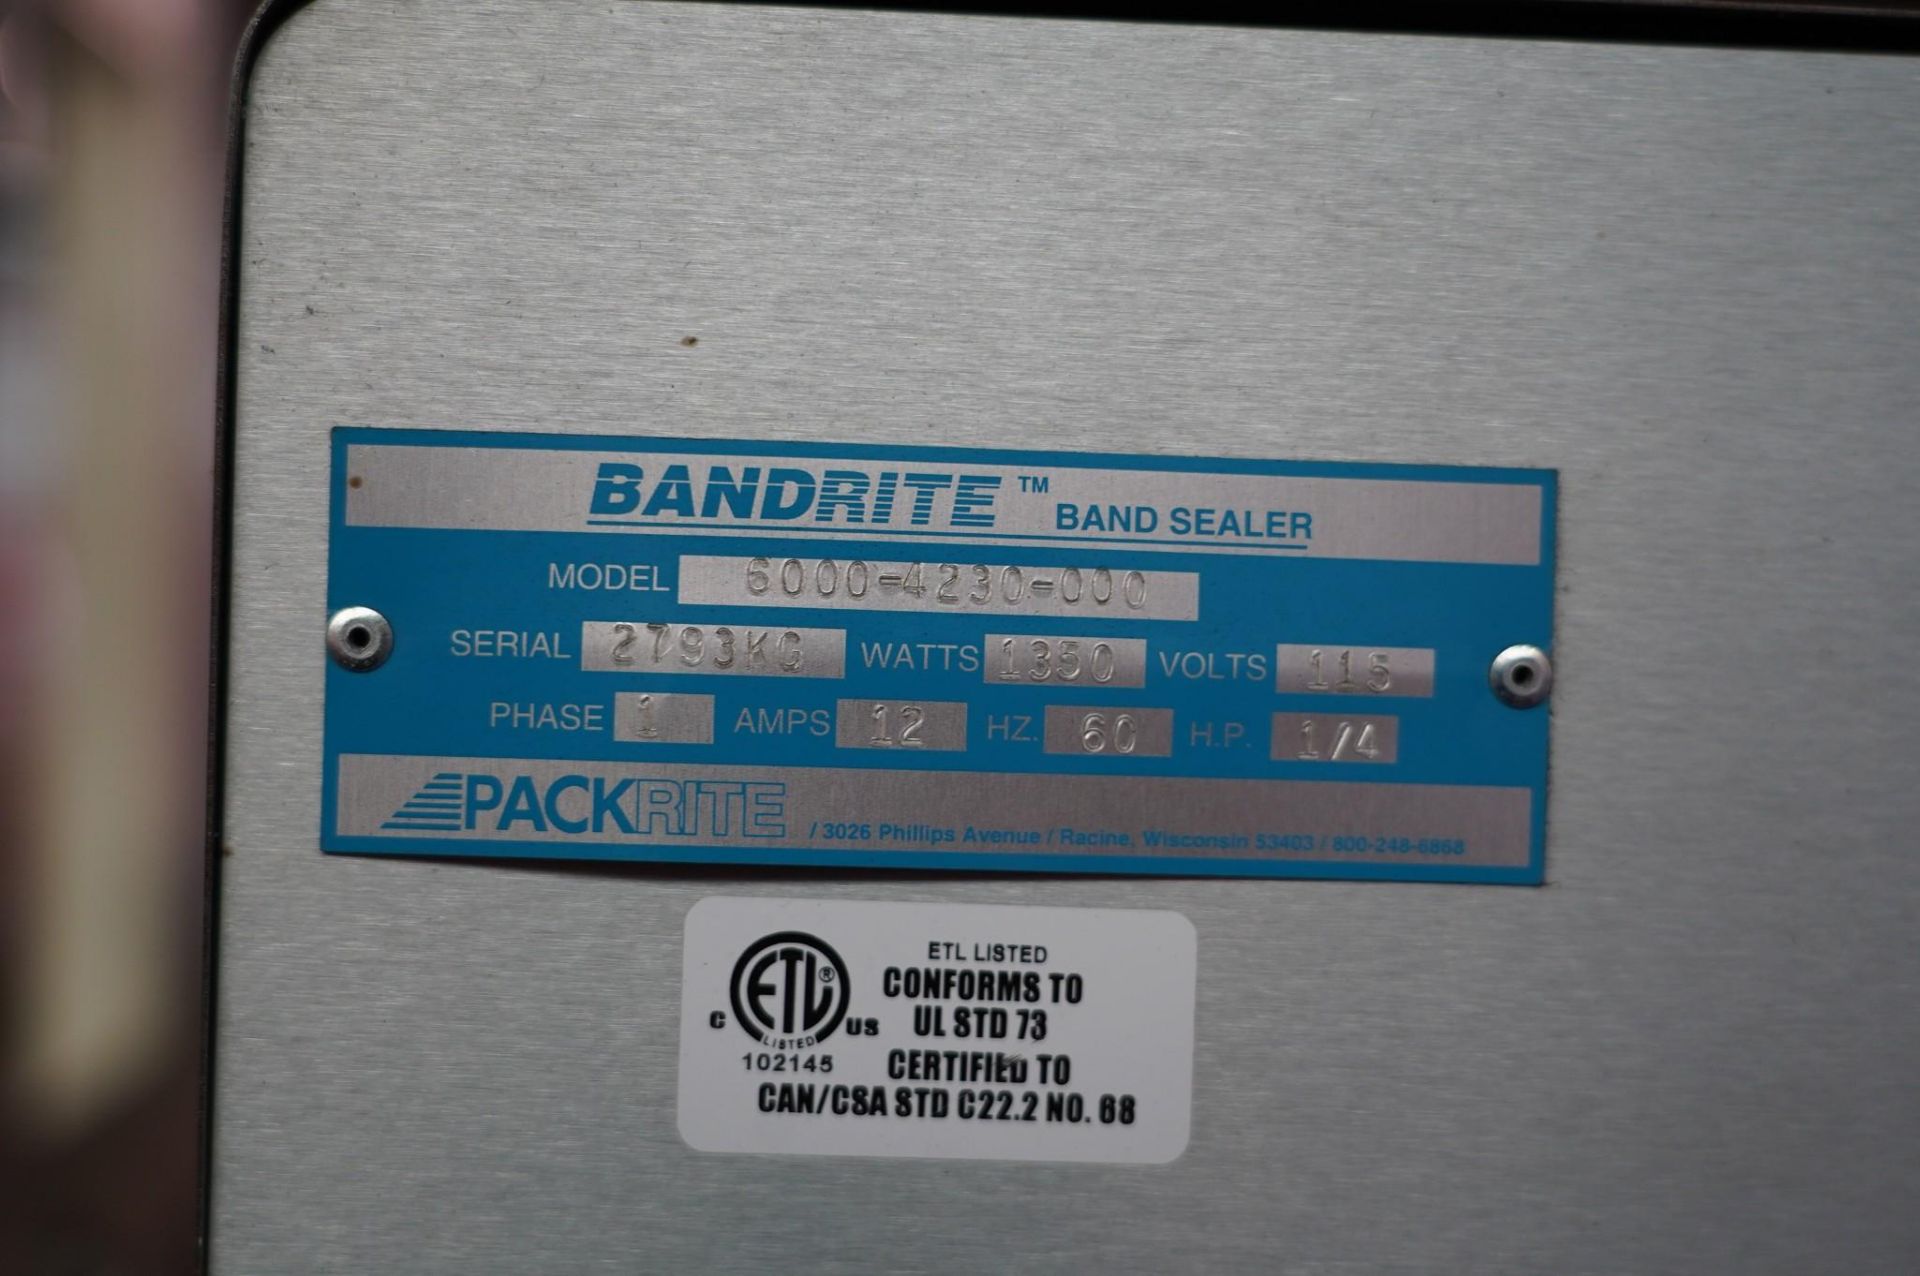 PACKRITE BANDRITE 6000 - 4230-000 BAND SEALER - Image 10 of 10